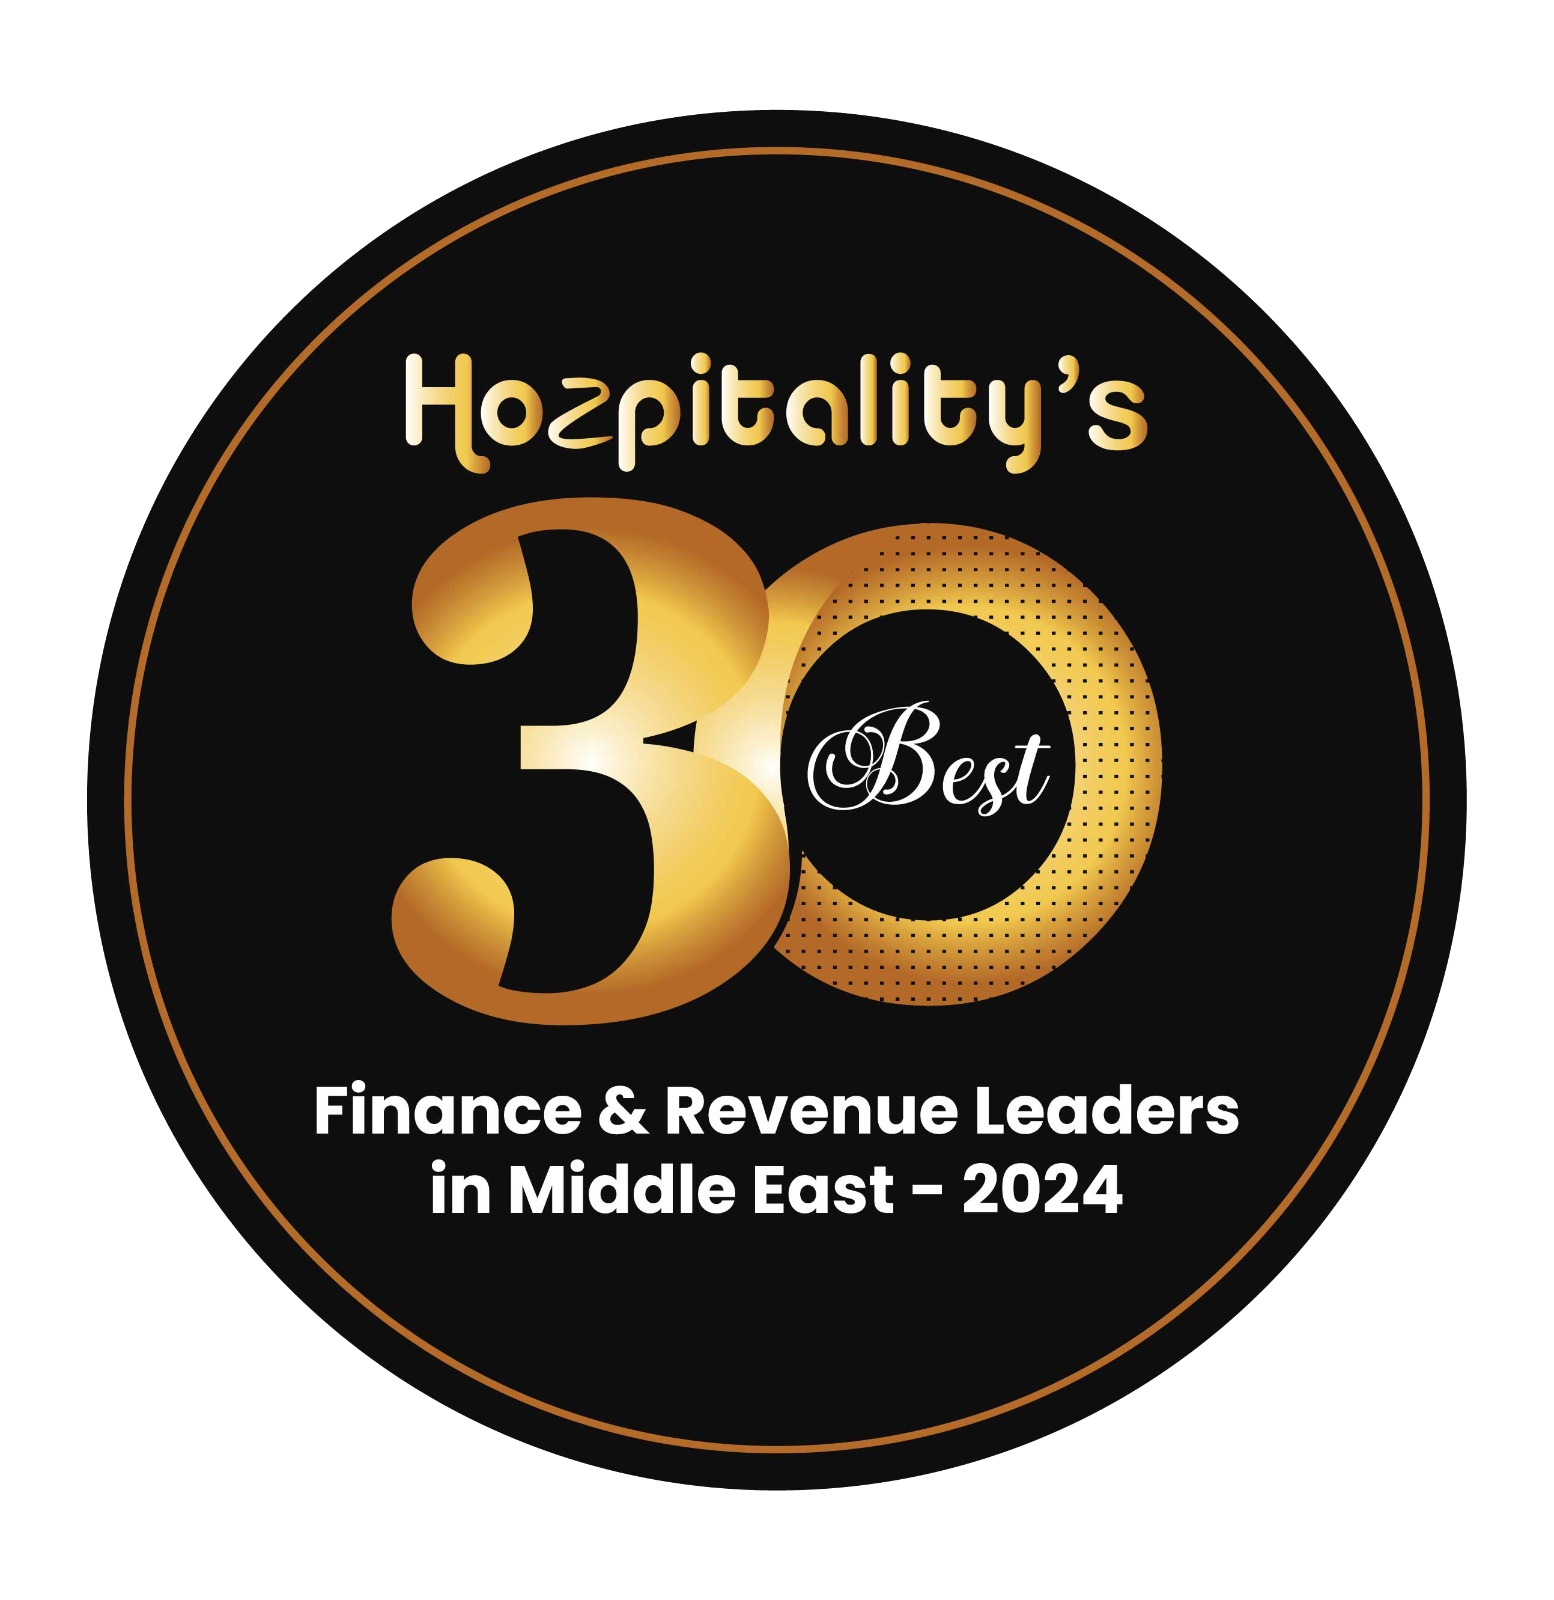 Finance & Revenue Leaders Hospitality Awards 2024